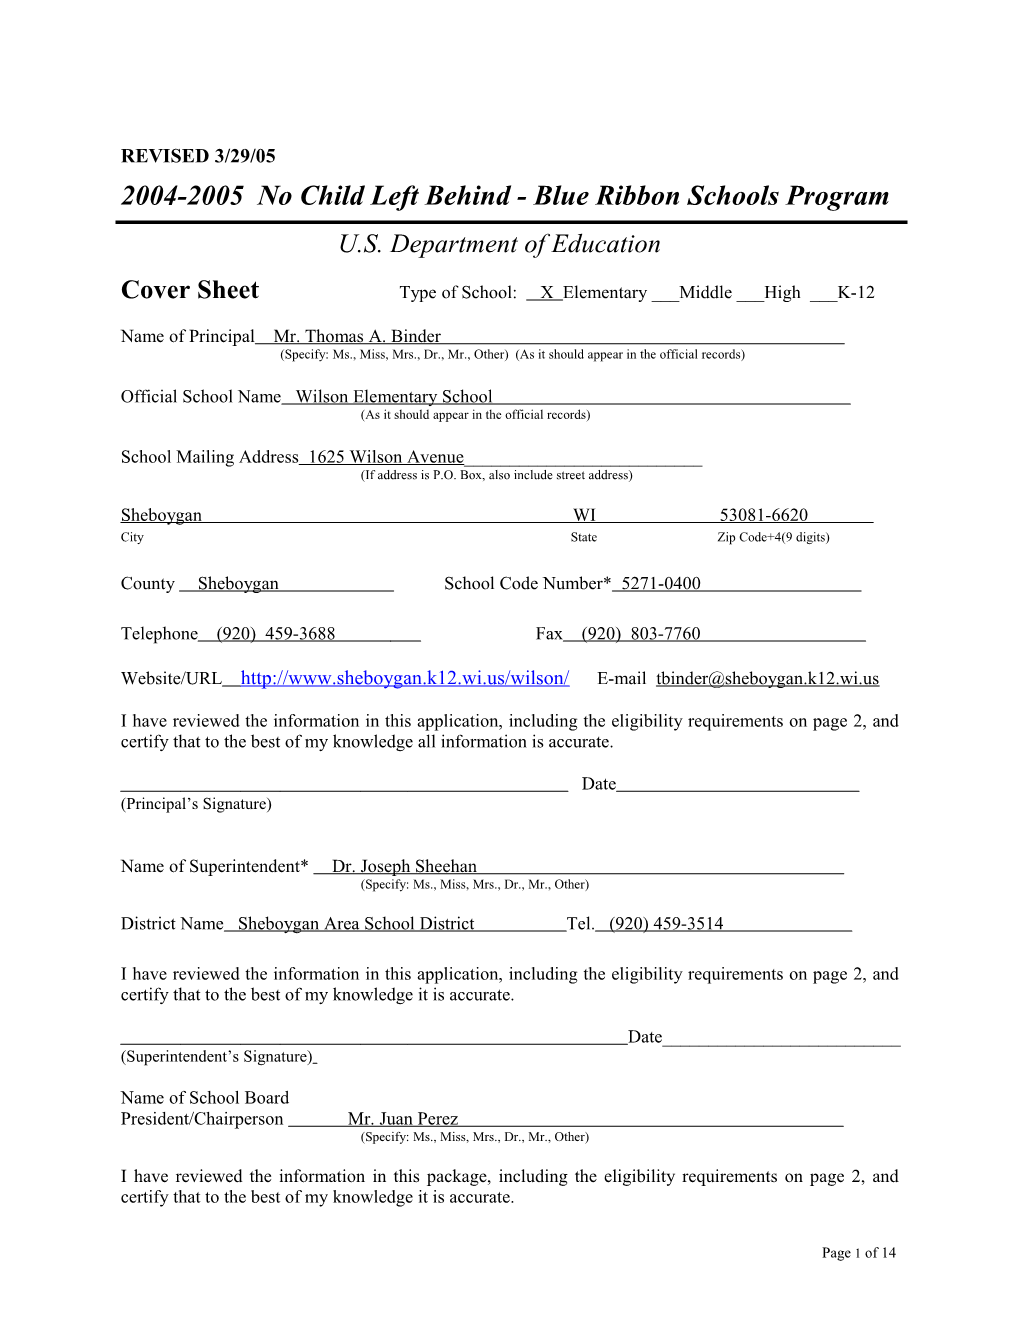 Wilson Elementary School Application: 2004-2005, No Child Left Behind - Blue Ribbon Schools